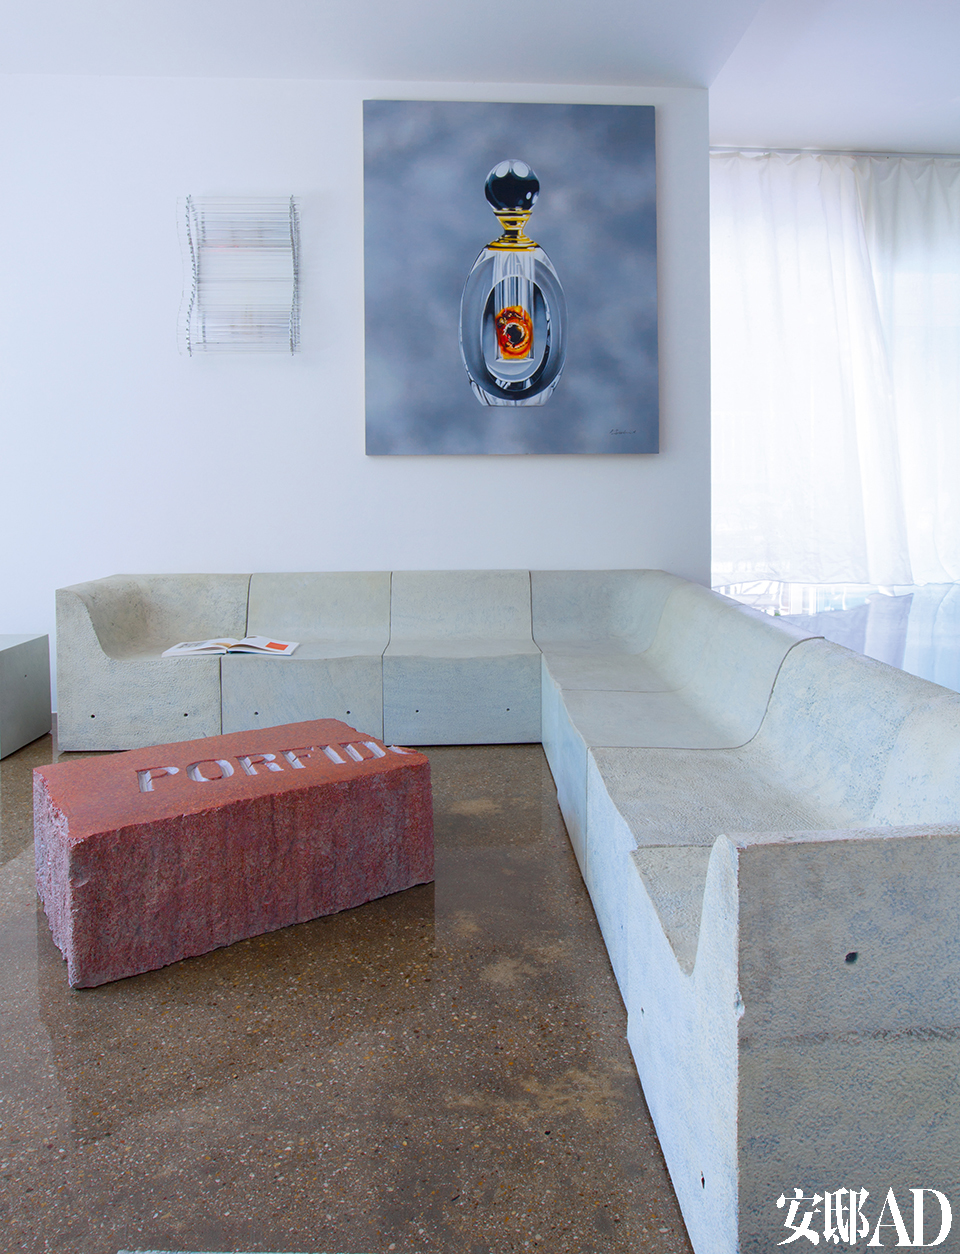 Gufram室内外兼用的沙发及咖啡桌，仿佛艺术装置，为客厅带来超凡气场。油画《六号香水》是Zhu Hai在2007年创作的。墙面上的玻璃壁灯名为“Nastri”，是意大利威尼斯Murano岛Venini在1999年出品的。名为“Softcrete”的组合沙发，是Ross Lovegrove于2007年设计的。客厅中央的茶几Massolo Piero Gilardi，是意大利品牌Gufram在1974年的作品。